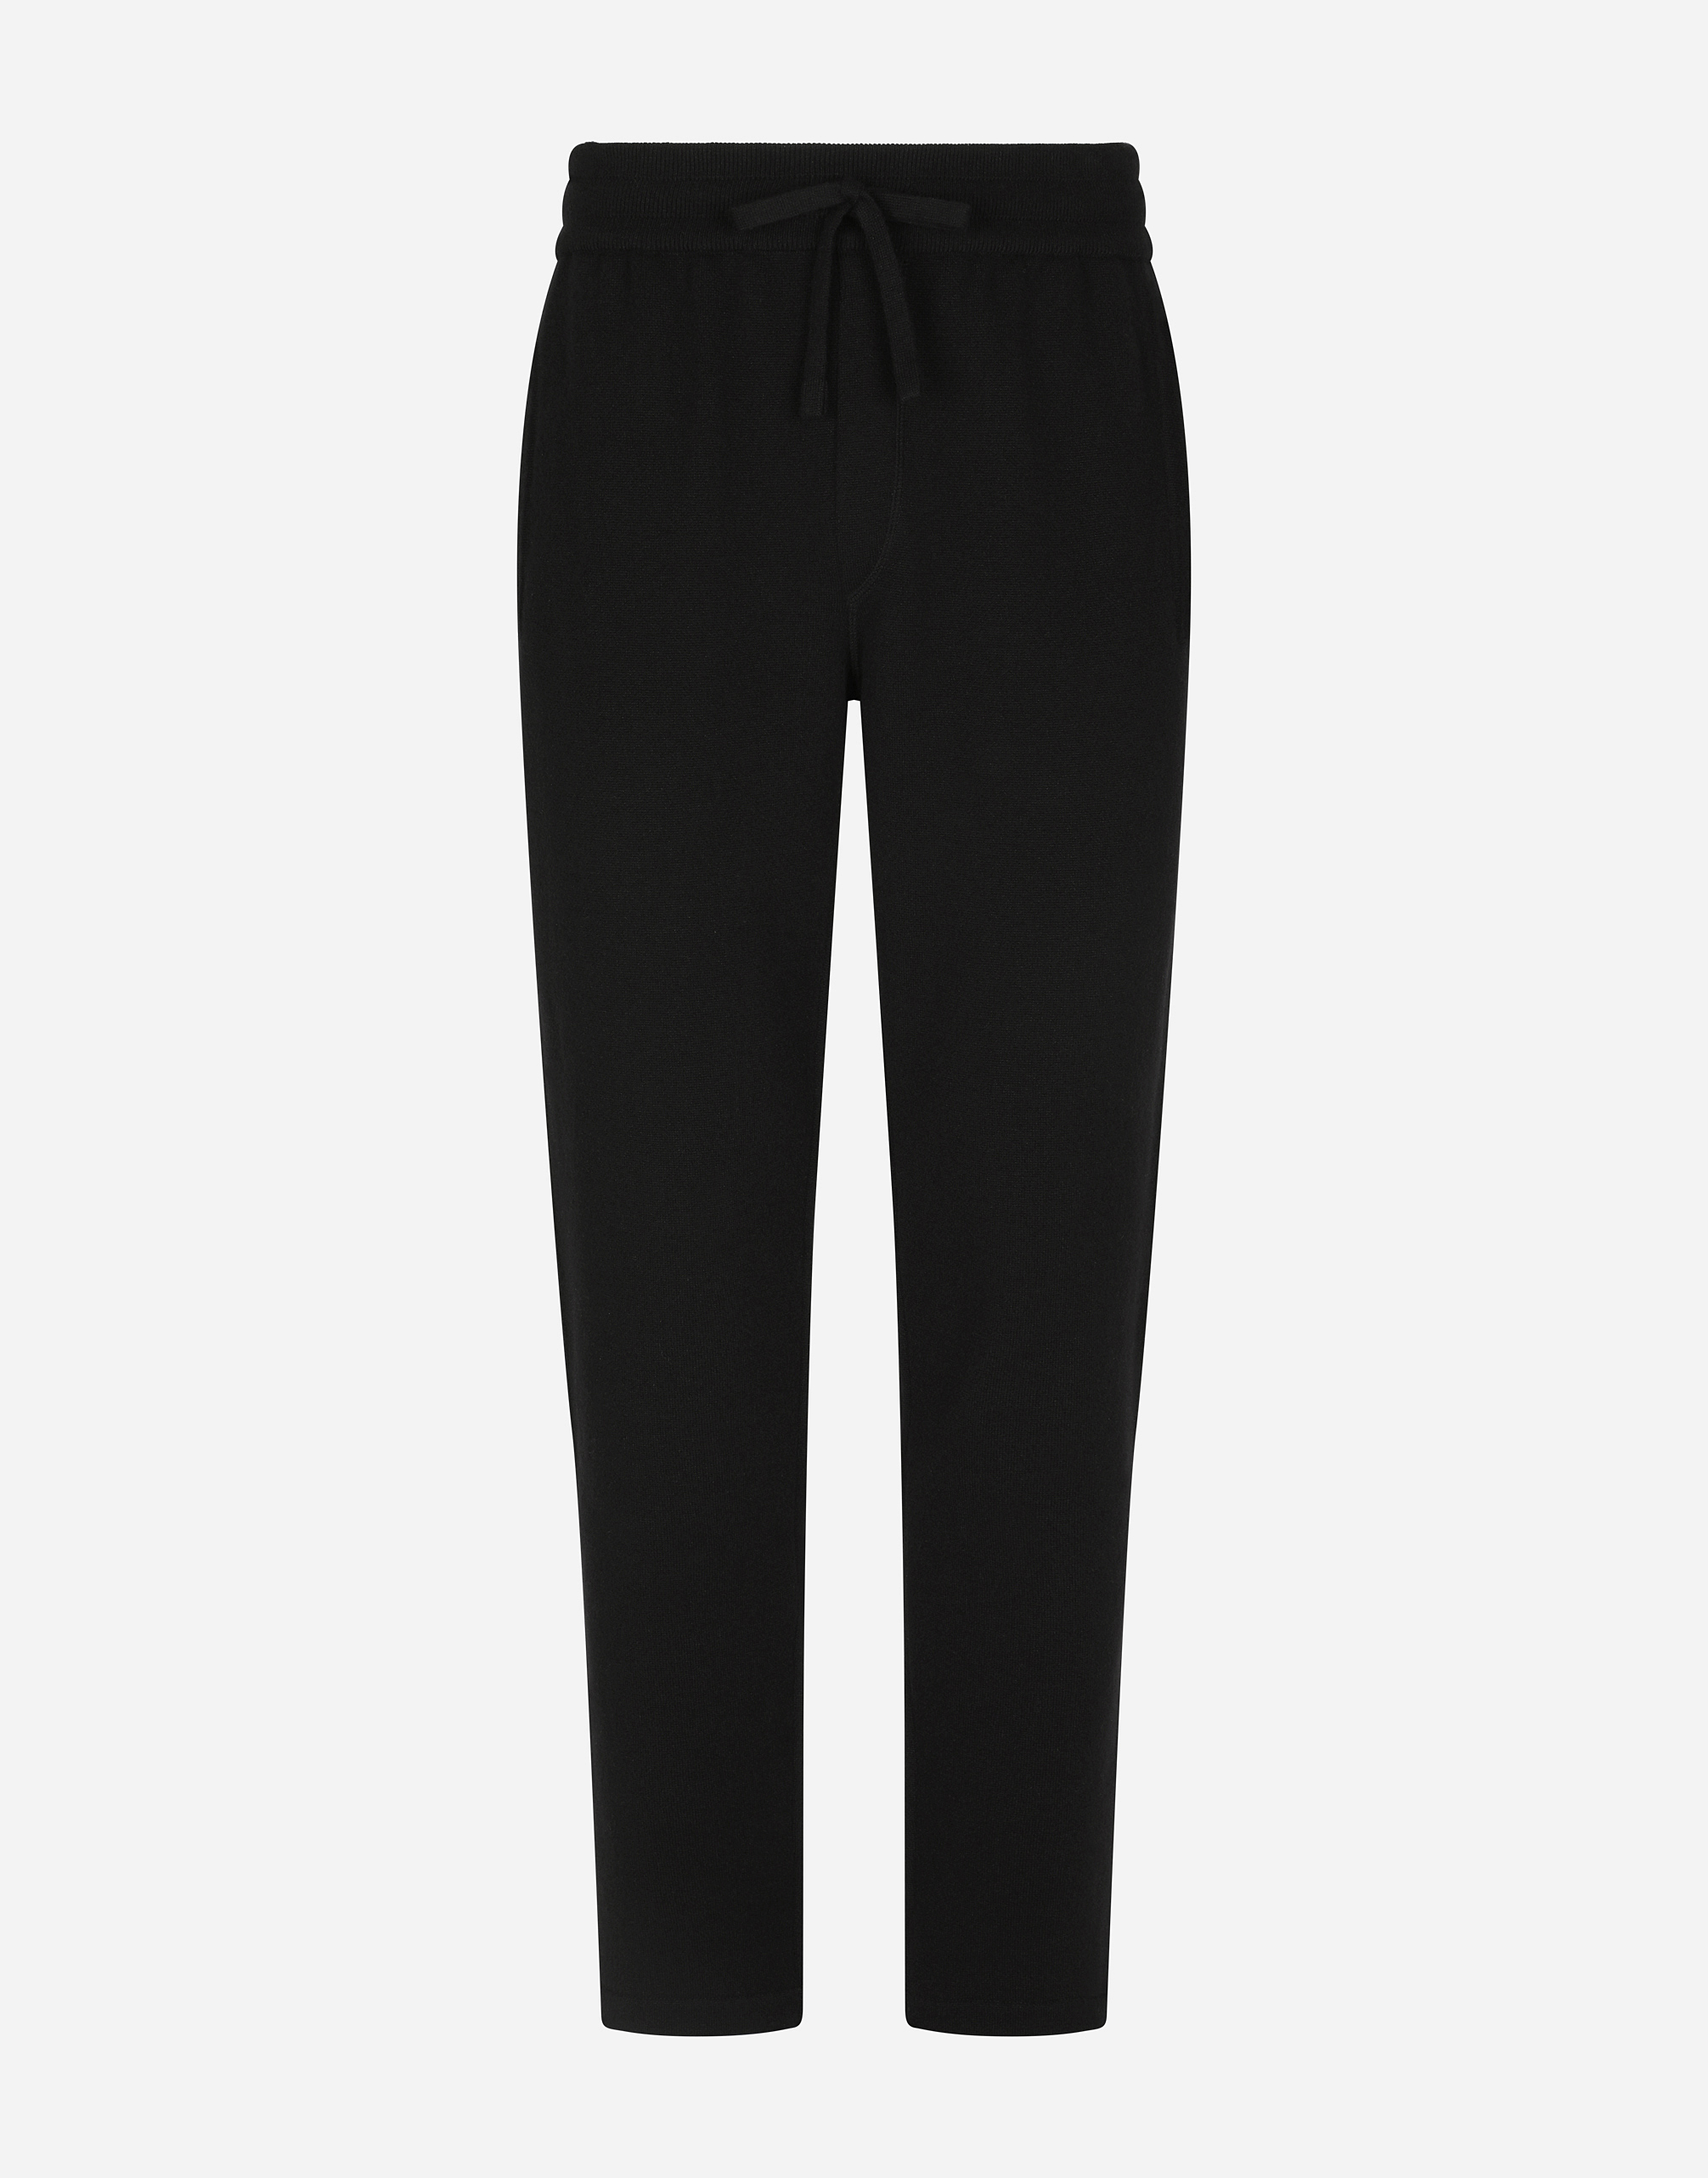 Cashmere jogging pants with DG logo in Black